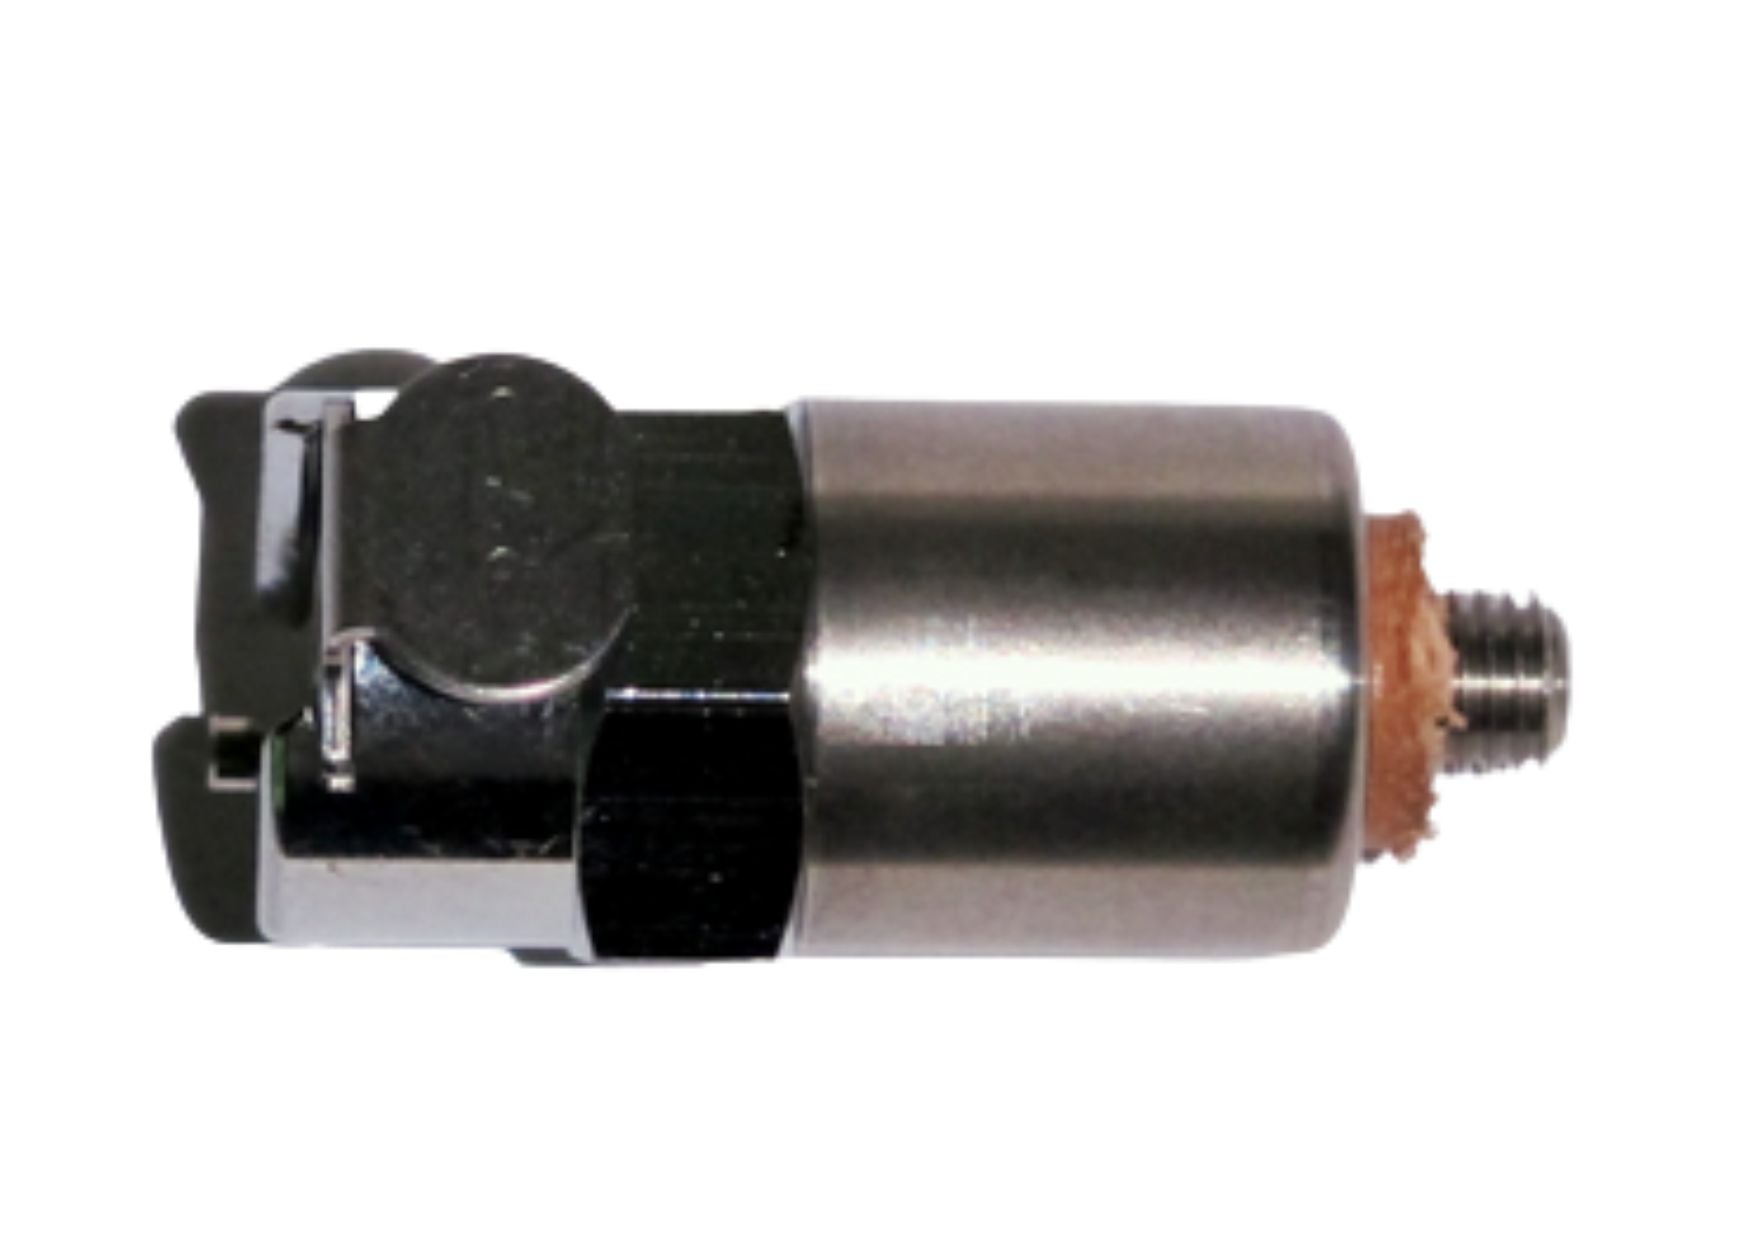 QC adapter, 12-32 thread, metal, female